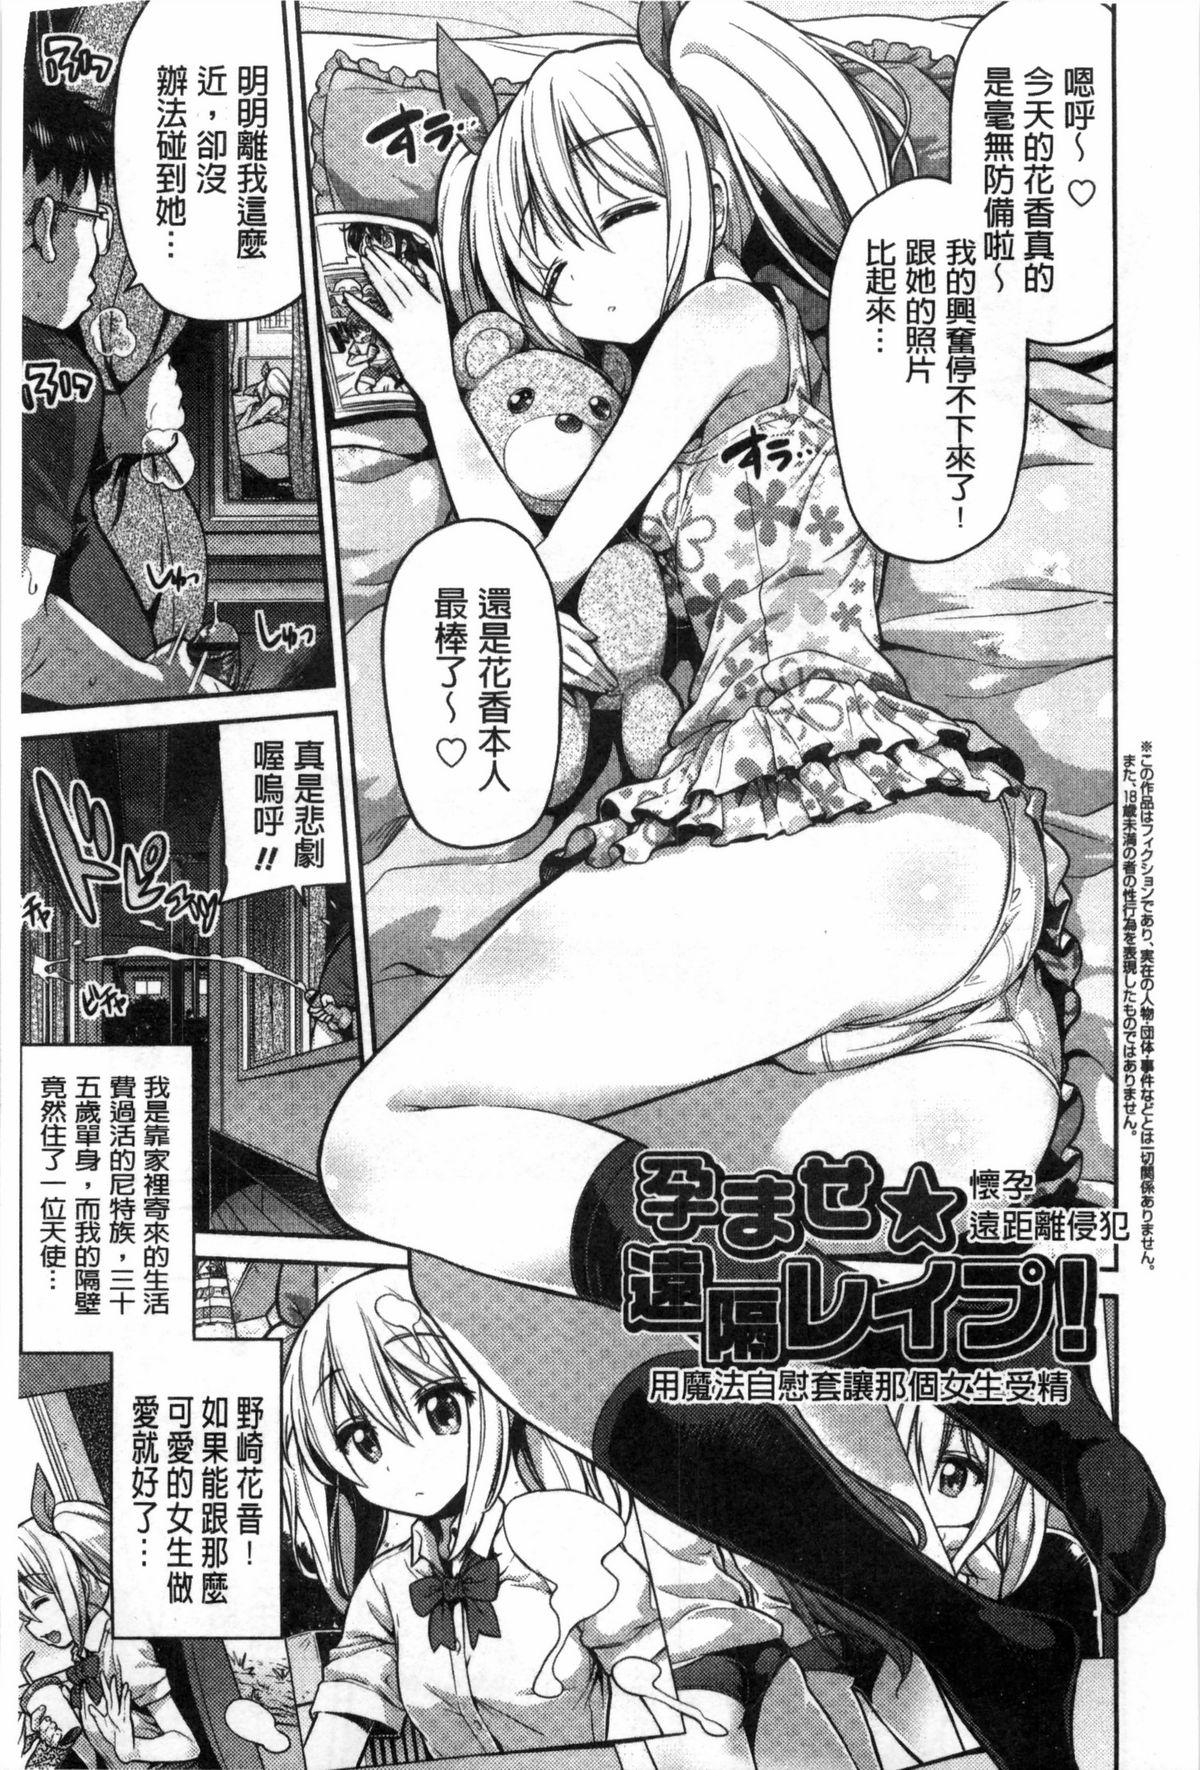 Man x Koi - Ero Manga de Hajimaru Koi no Plot | A漫×戀情 由情色漫畫所萌生的戀之物語 189